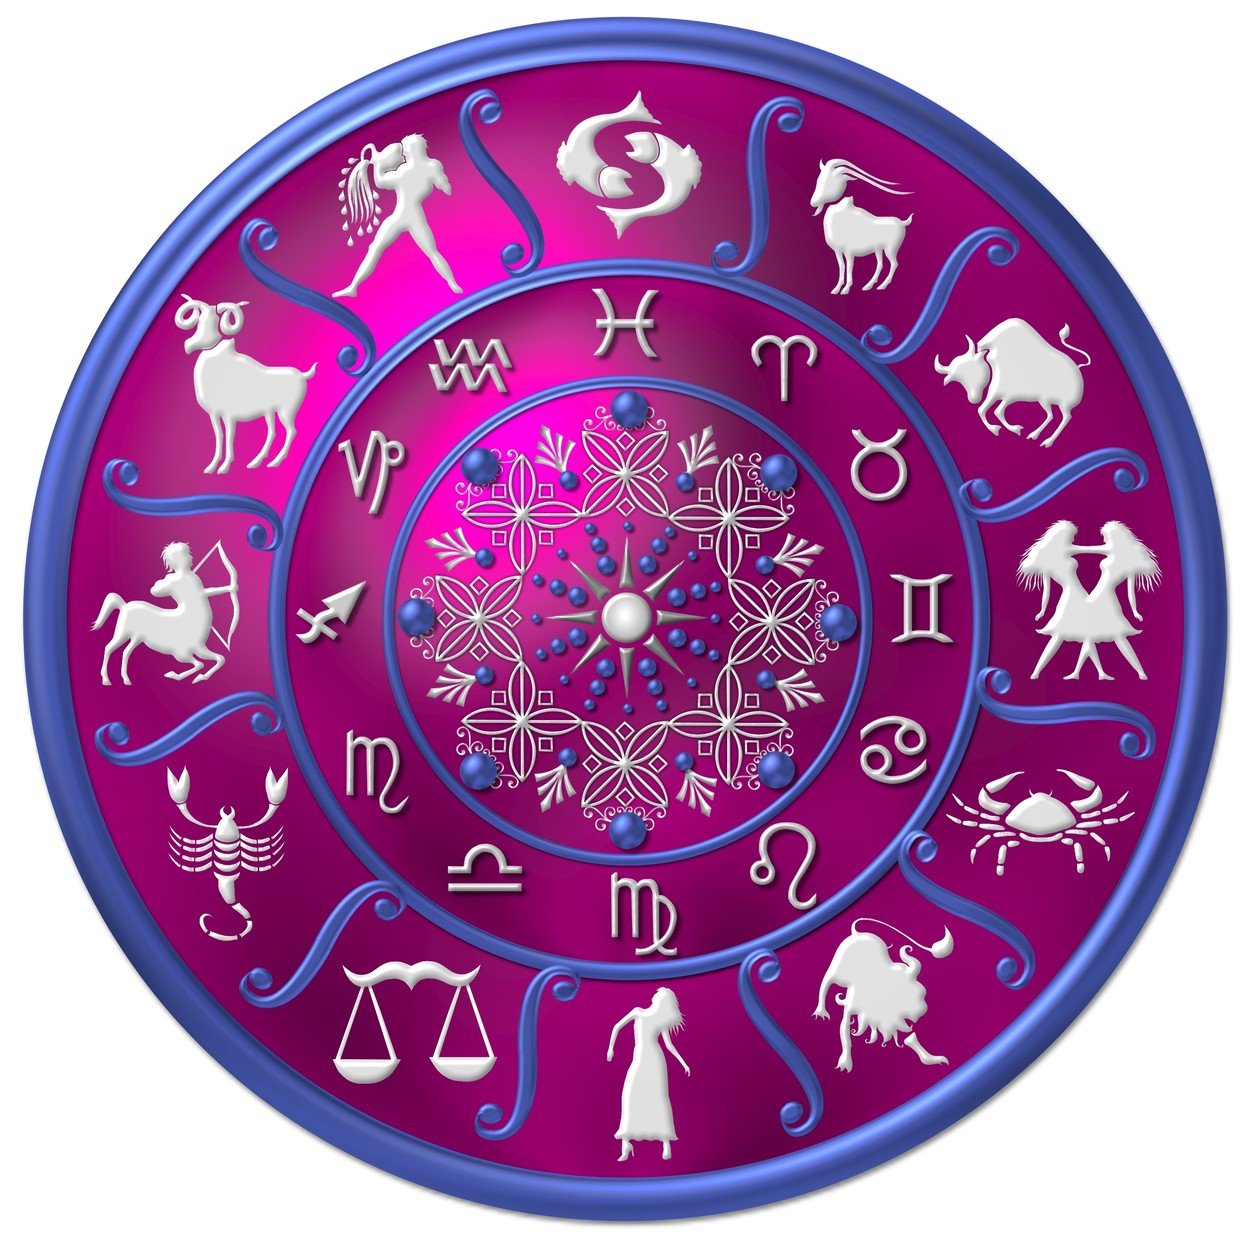 Dnevni horoskop za petek, 3. decembra 2021 - Style.Over.Net.